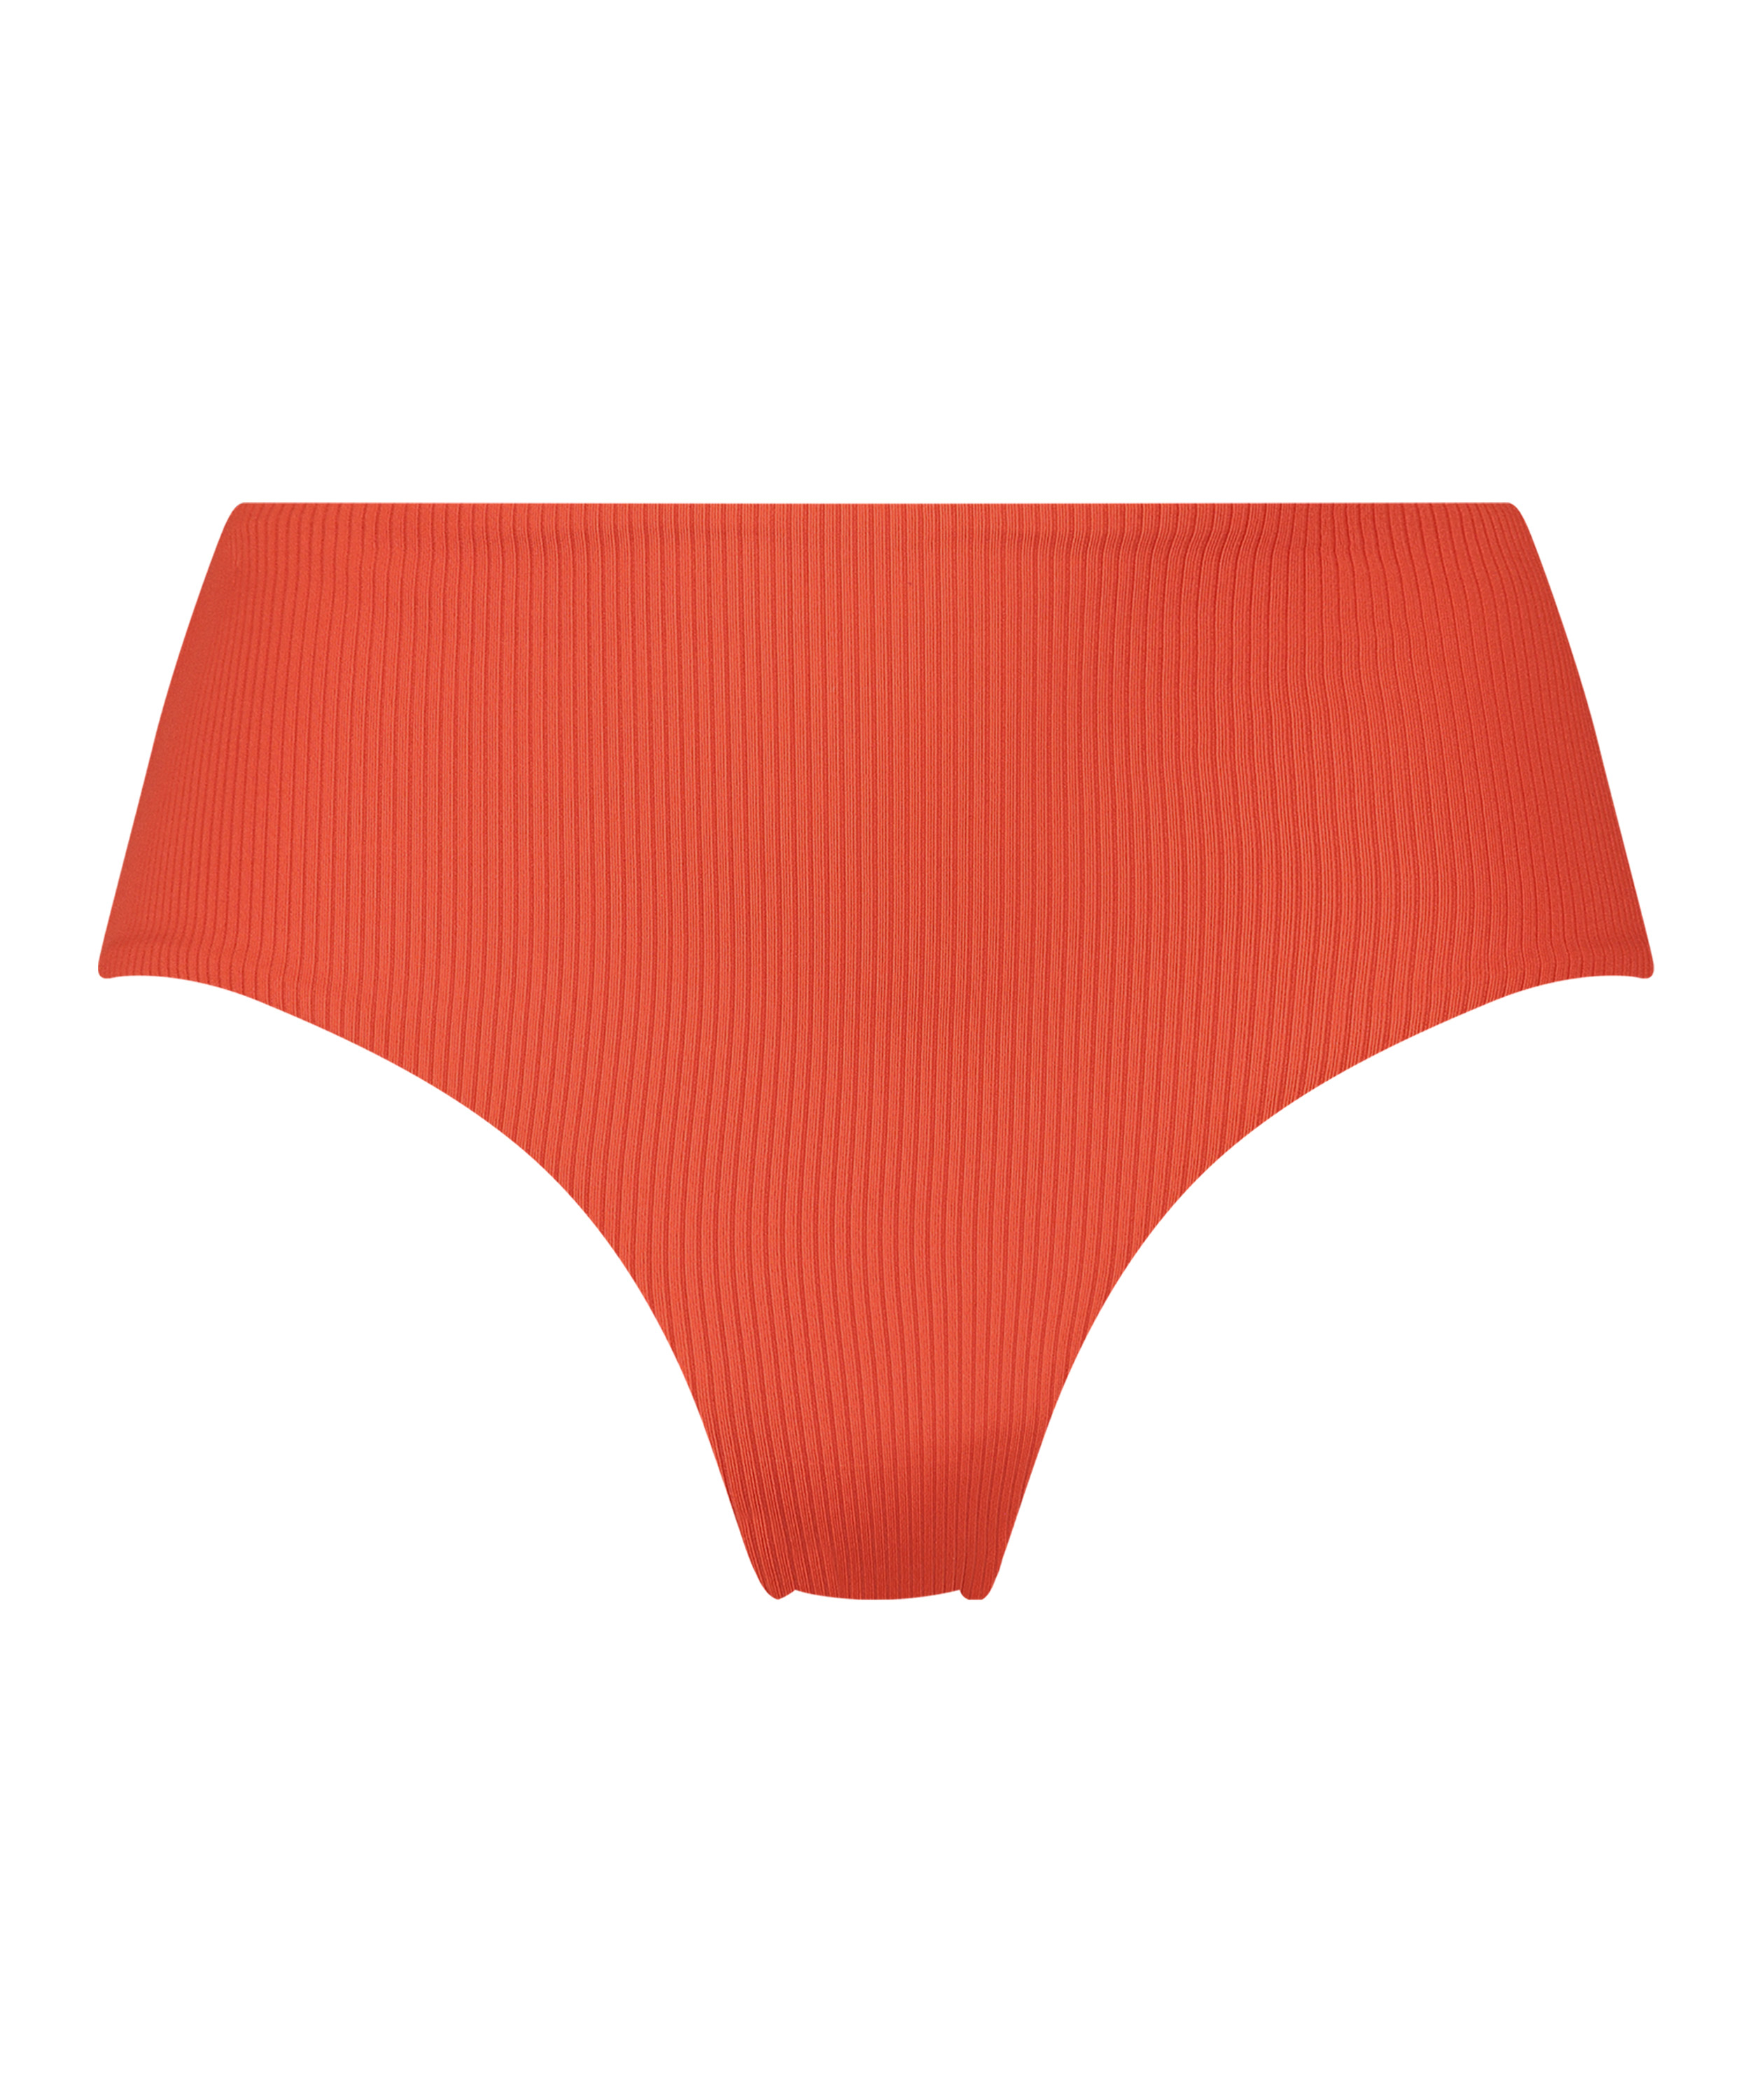 Bikini Slip Rio Aruana, Orange, main